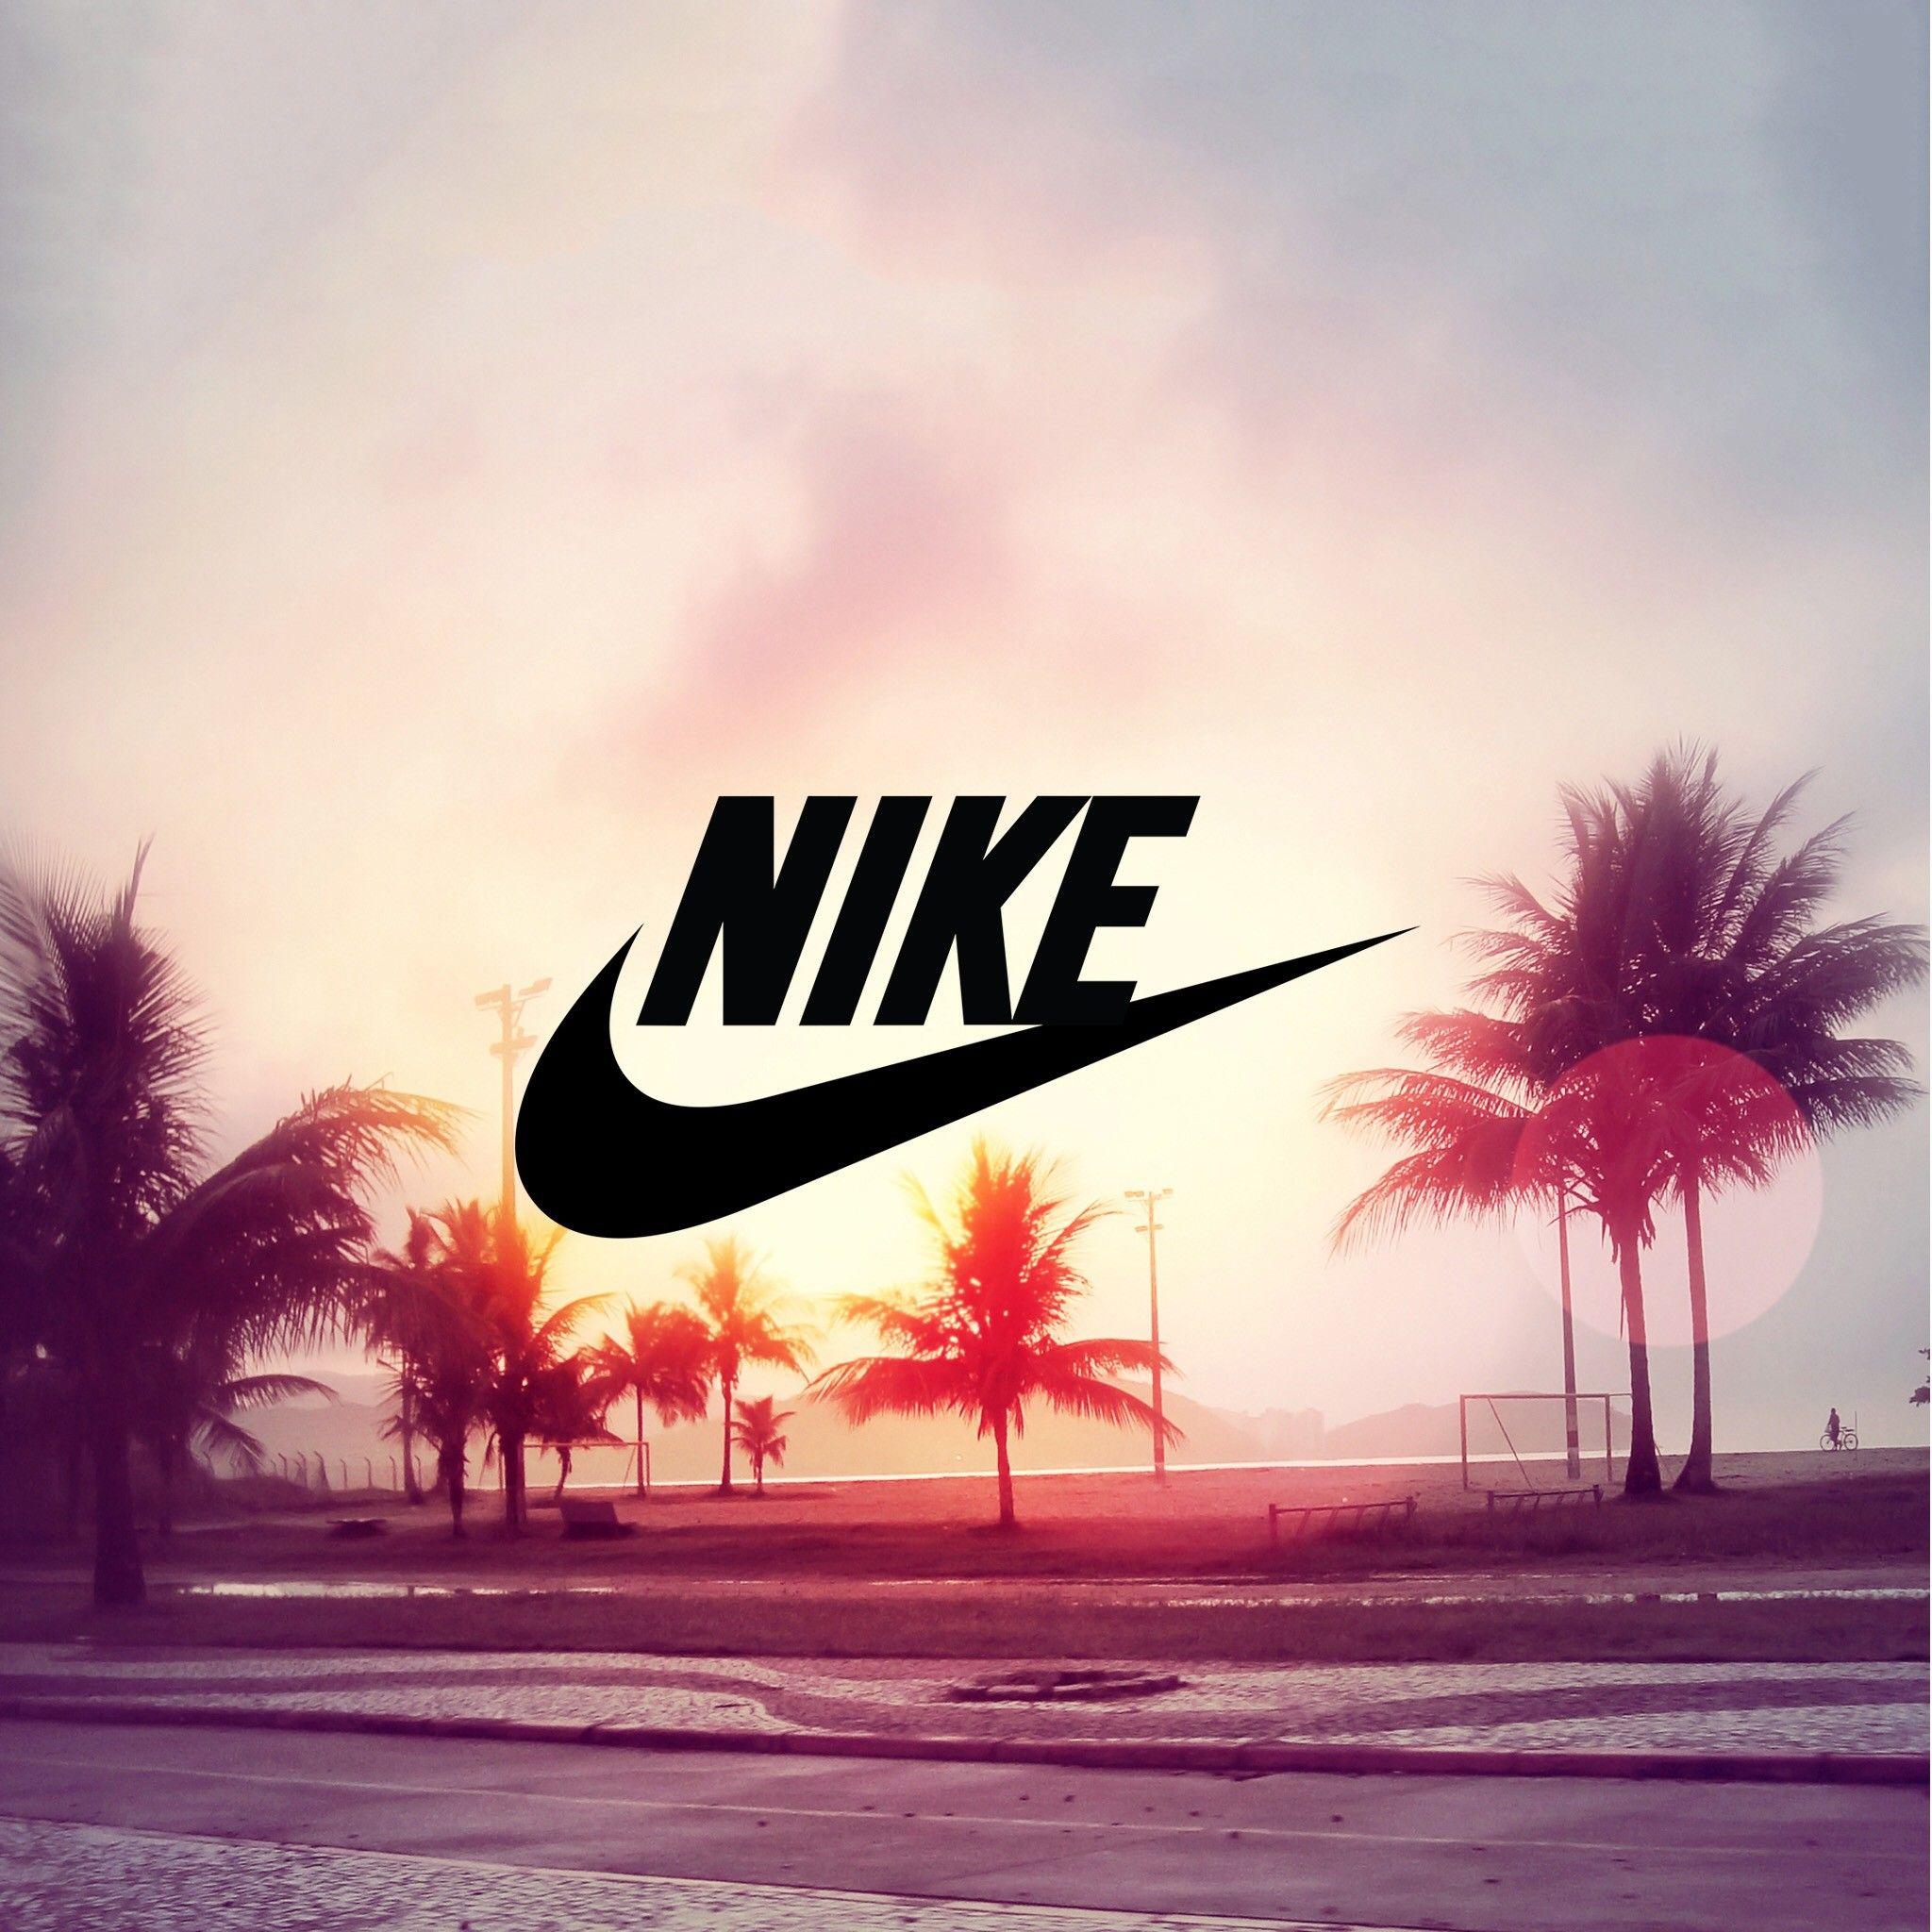 Collection Images Imagenes De Nike Para Fondo De Pantalla Stunning